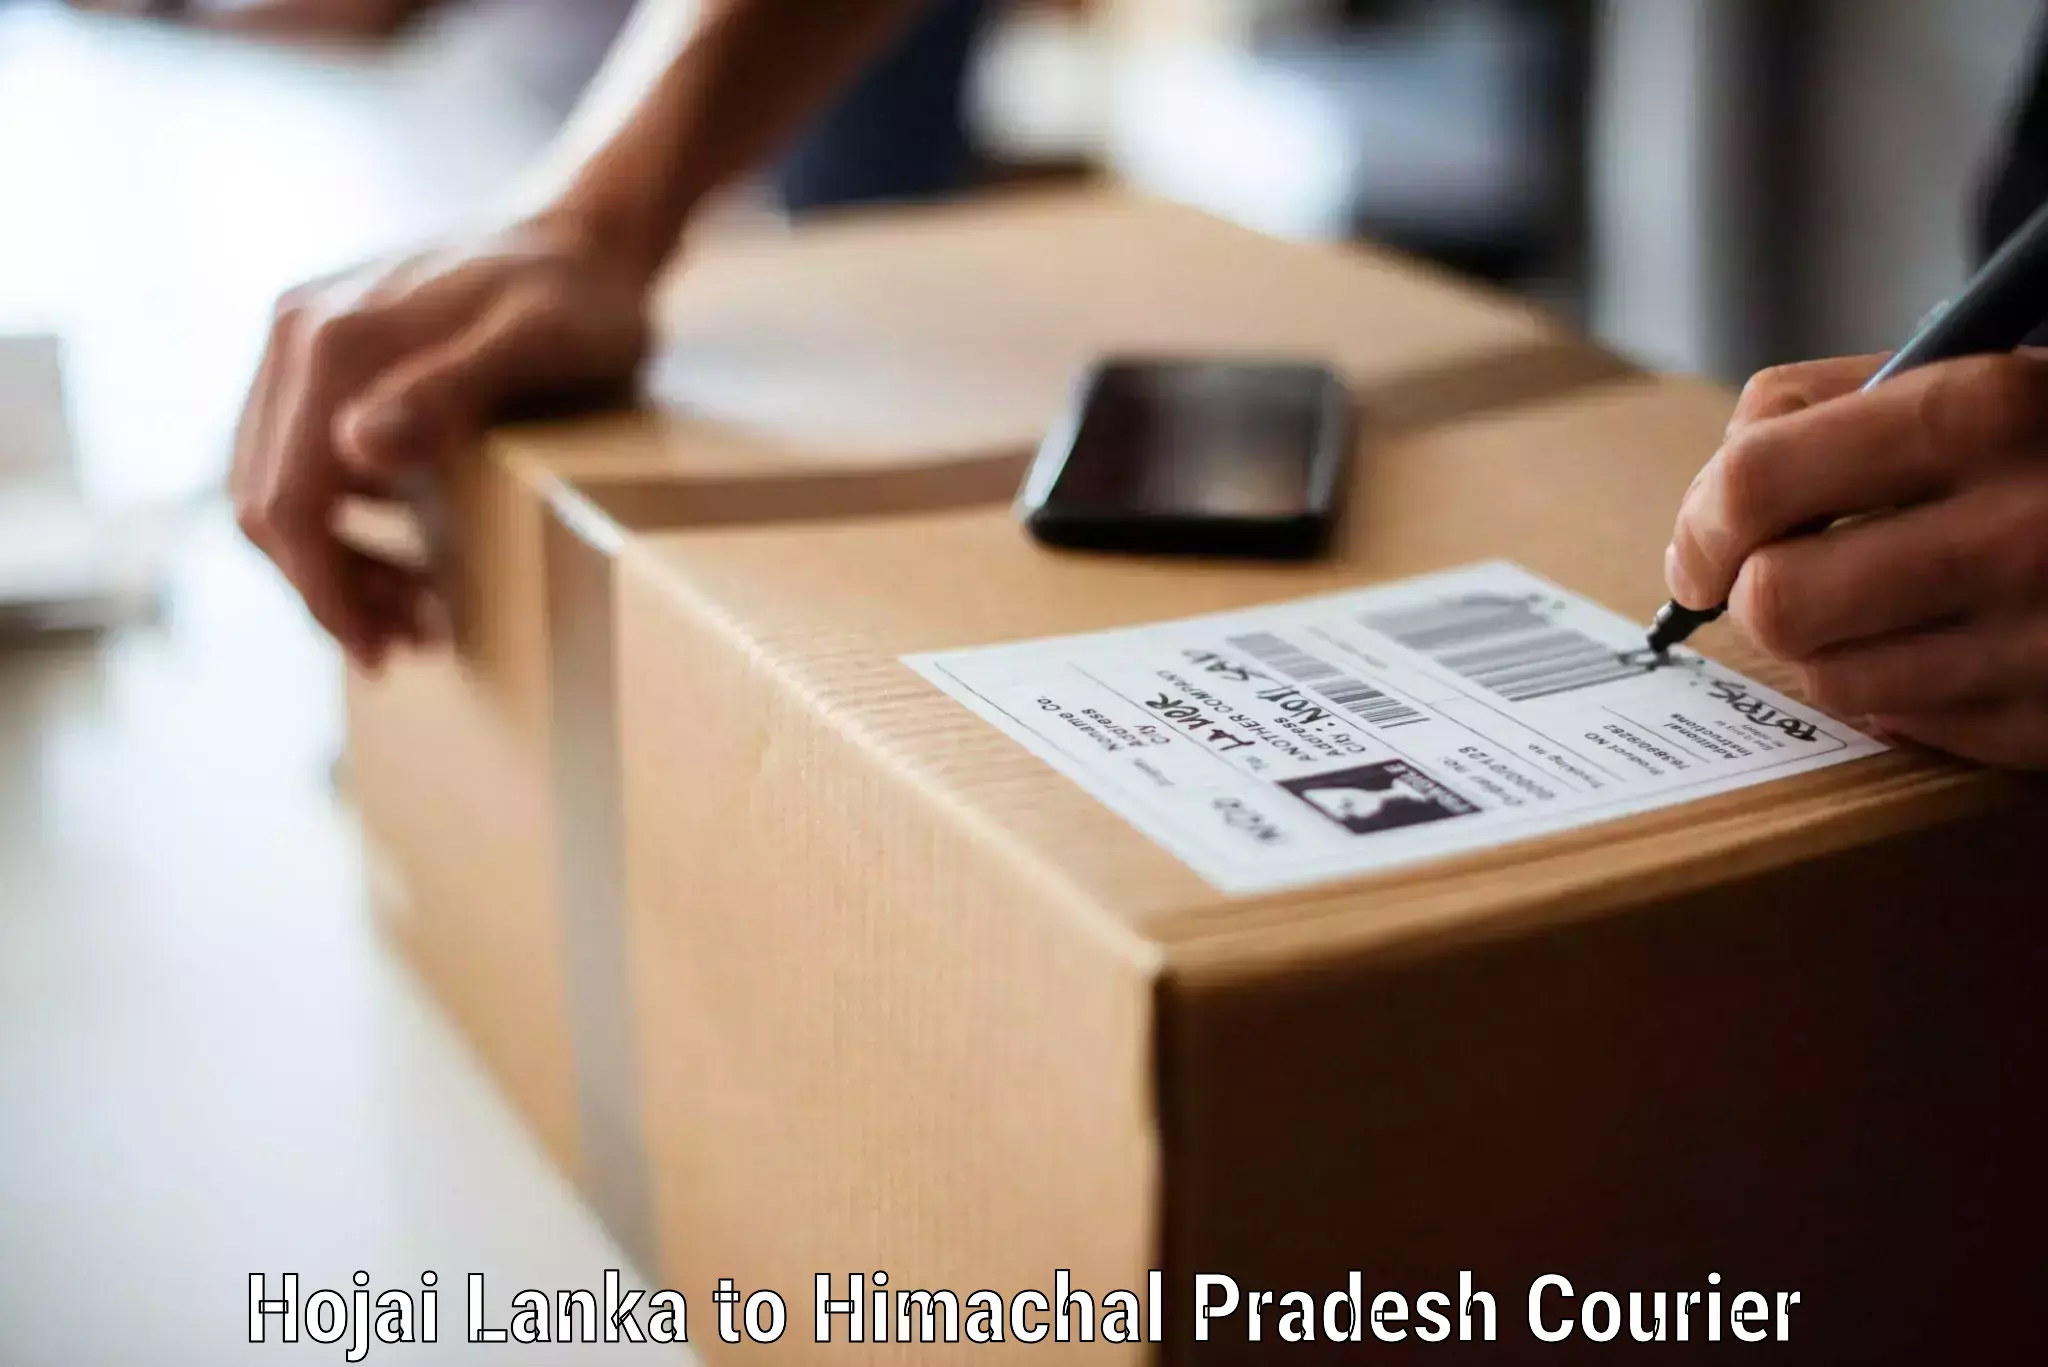 Dependable furniture movers Hojai Lanka to Jukhala